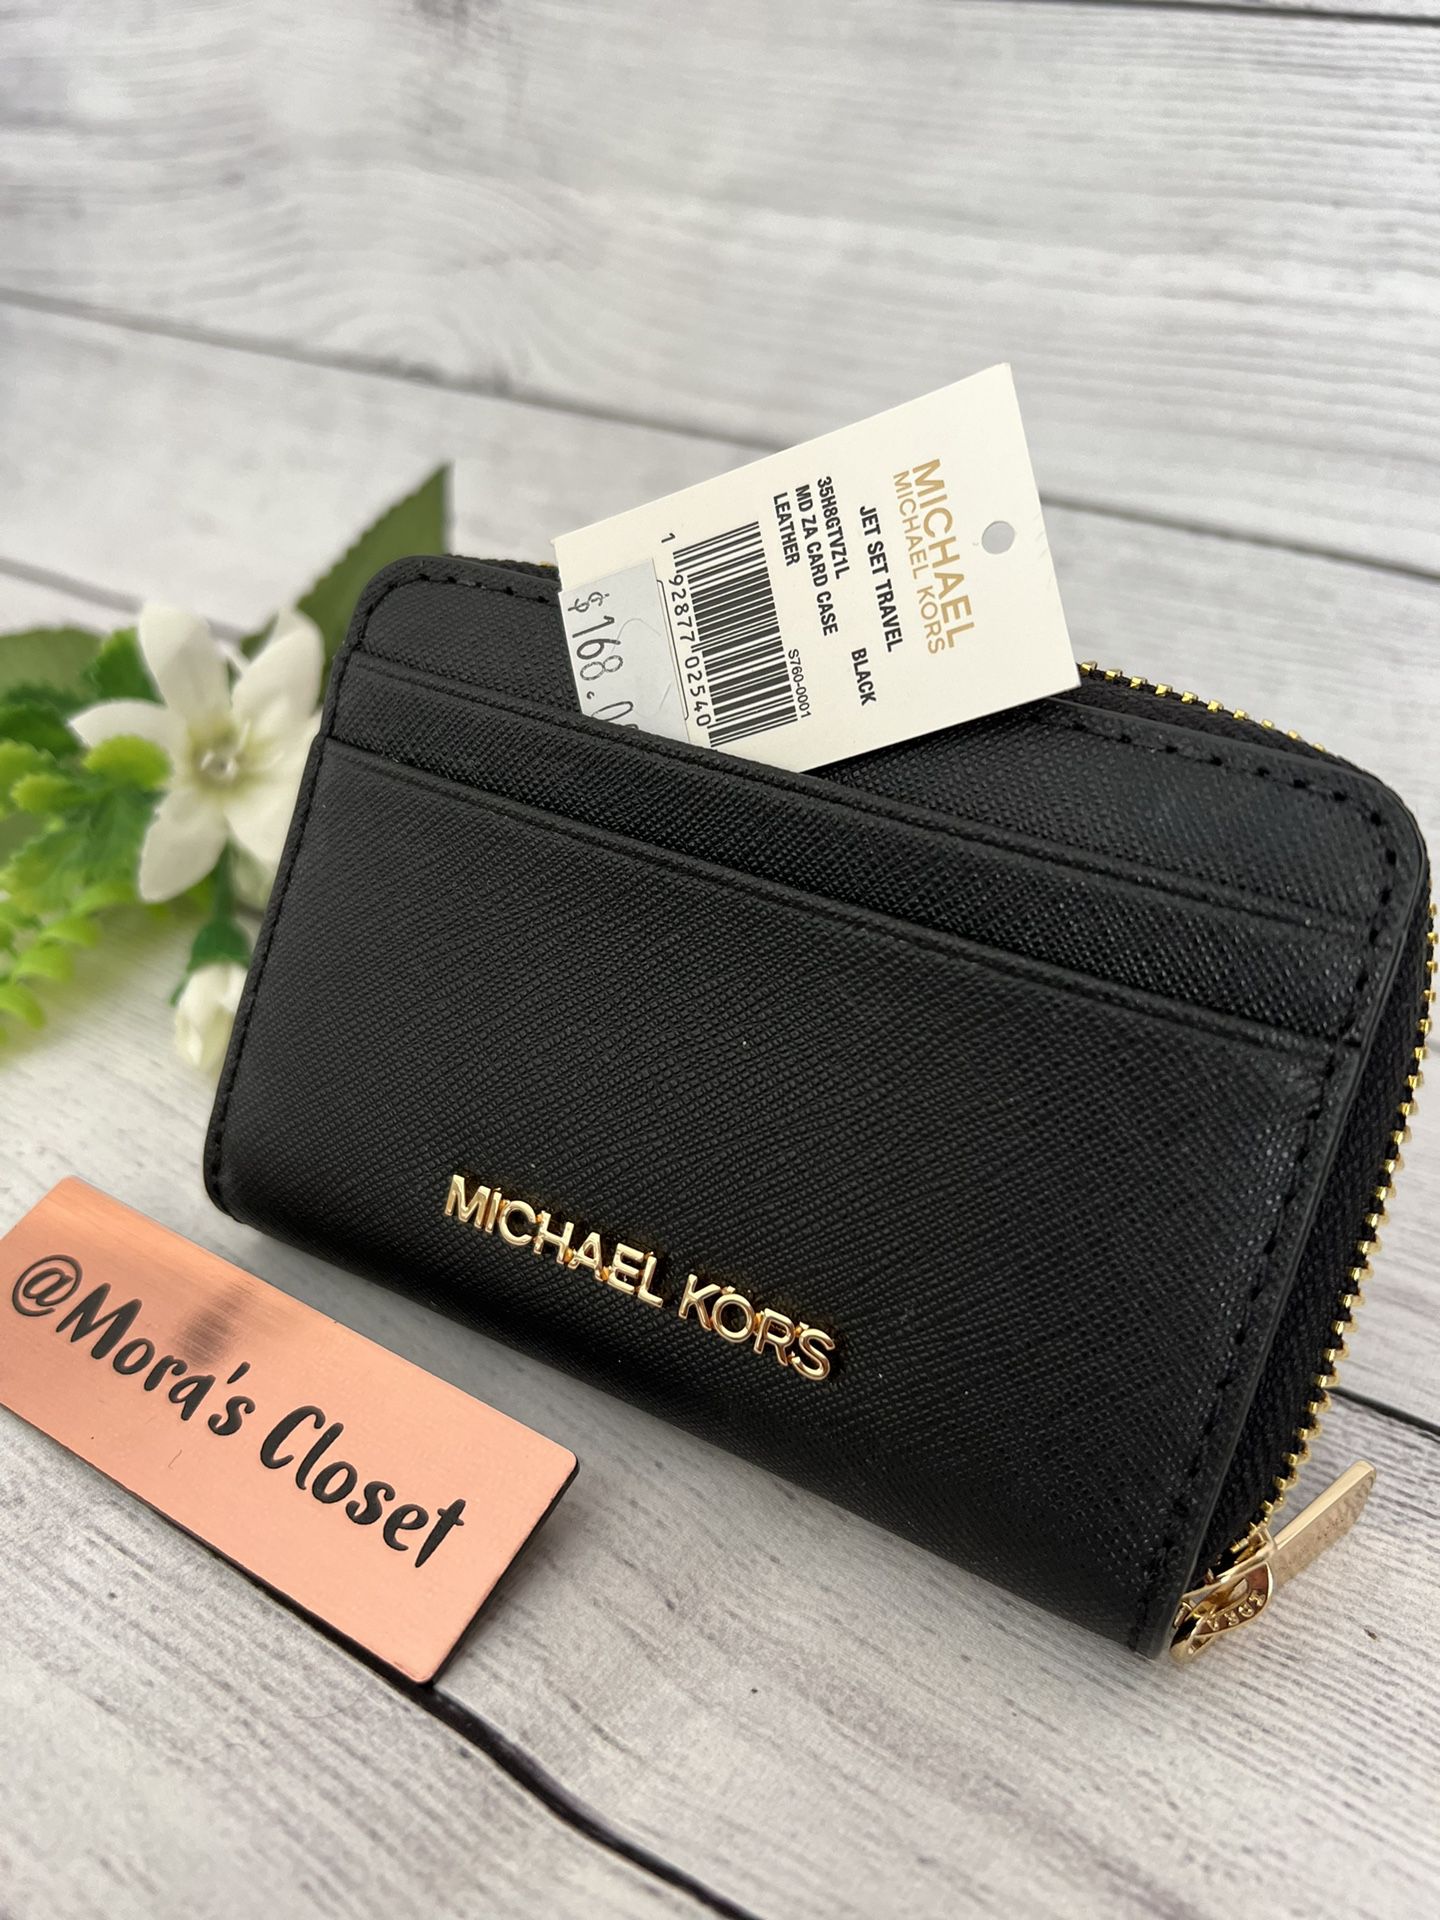 NWOT Michael Kors Crossbody Phone Wallet for Sale in Peoria, AZ - OfferUp